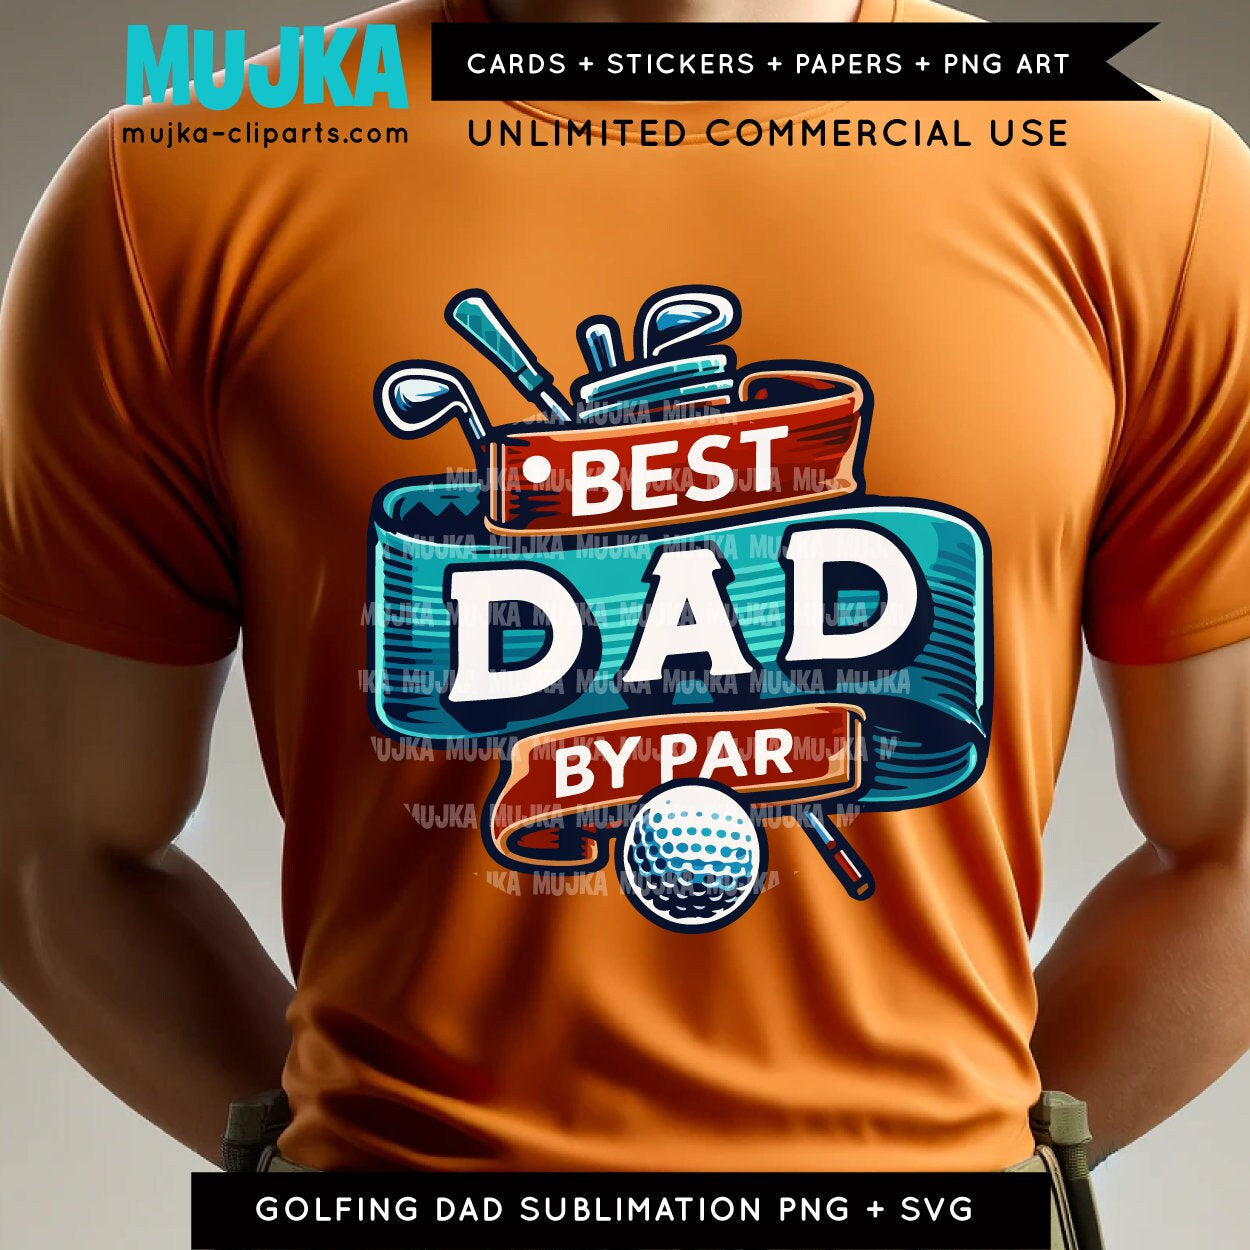 Best Dad by Par PNG SVG, Golfing Dad Png Bundle, Sublimation design download, Golf Life SVG, Tee it Up pops Png, Fathers Day Gift Clipart